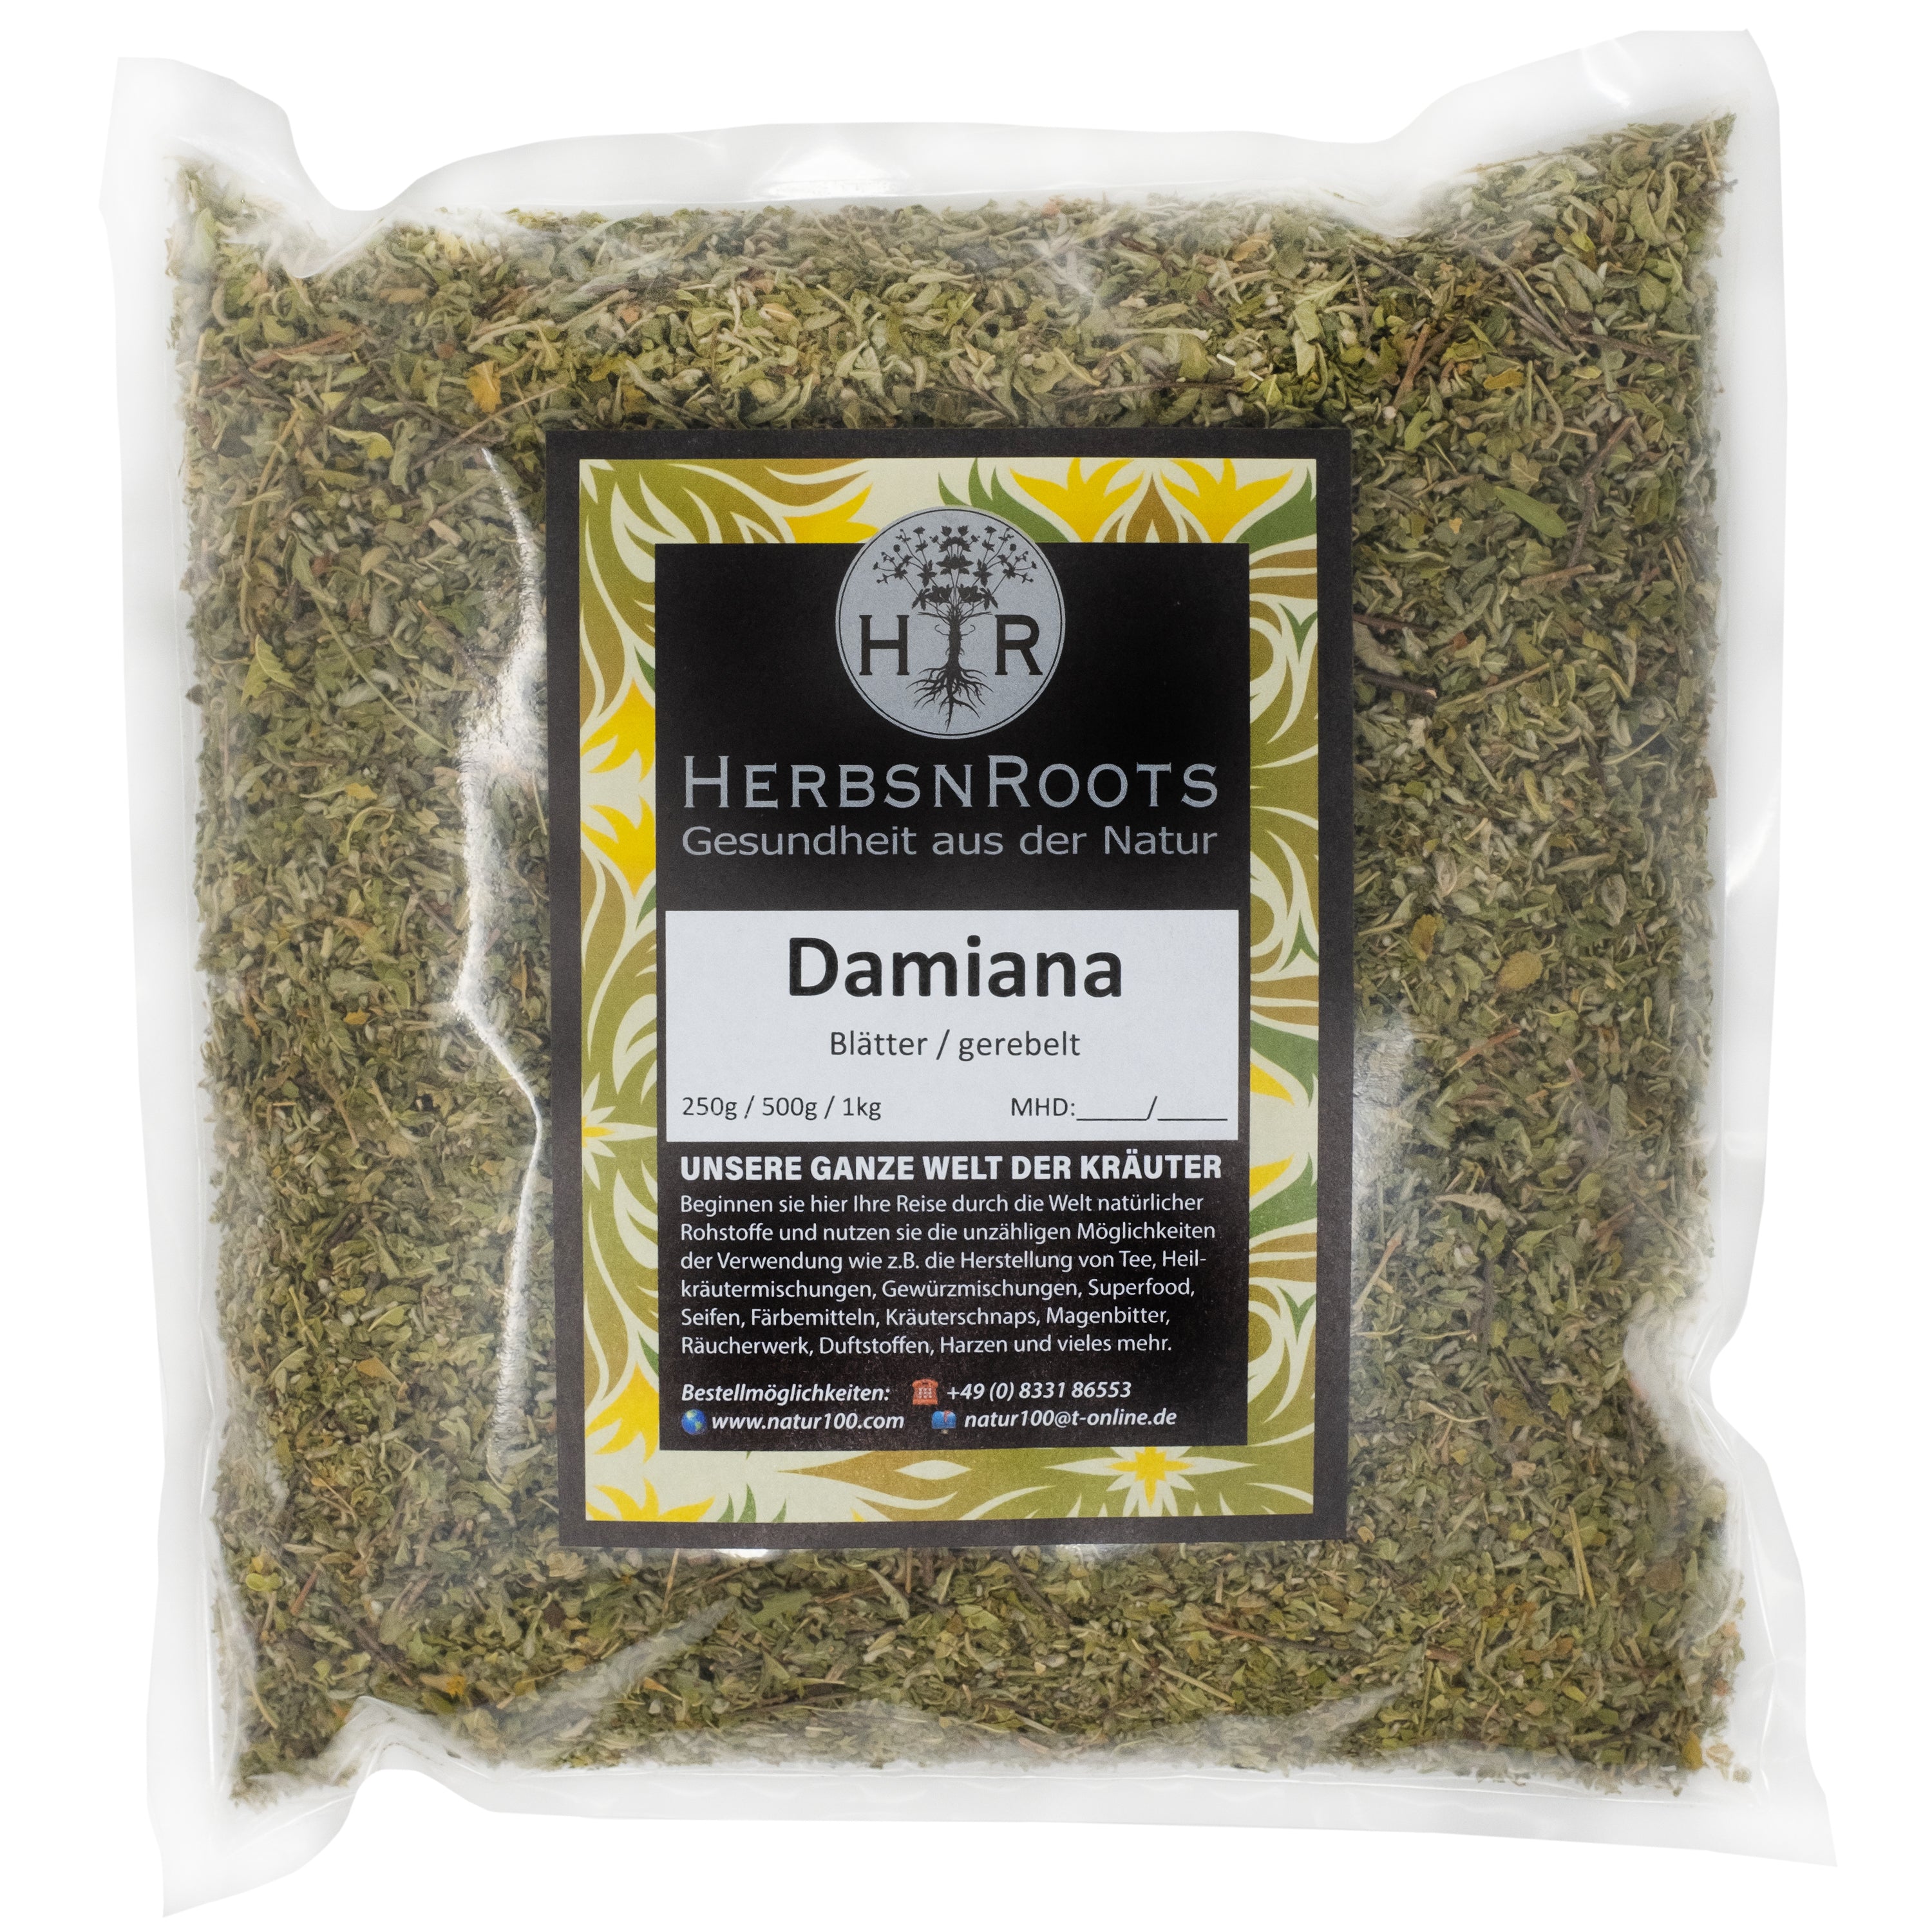 Damiana leaves / tea